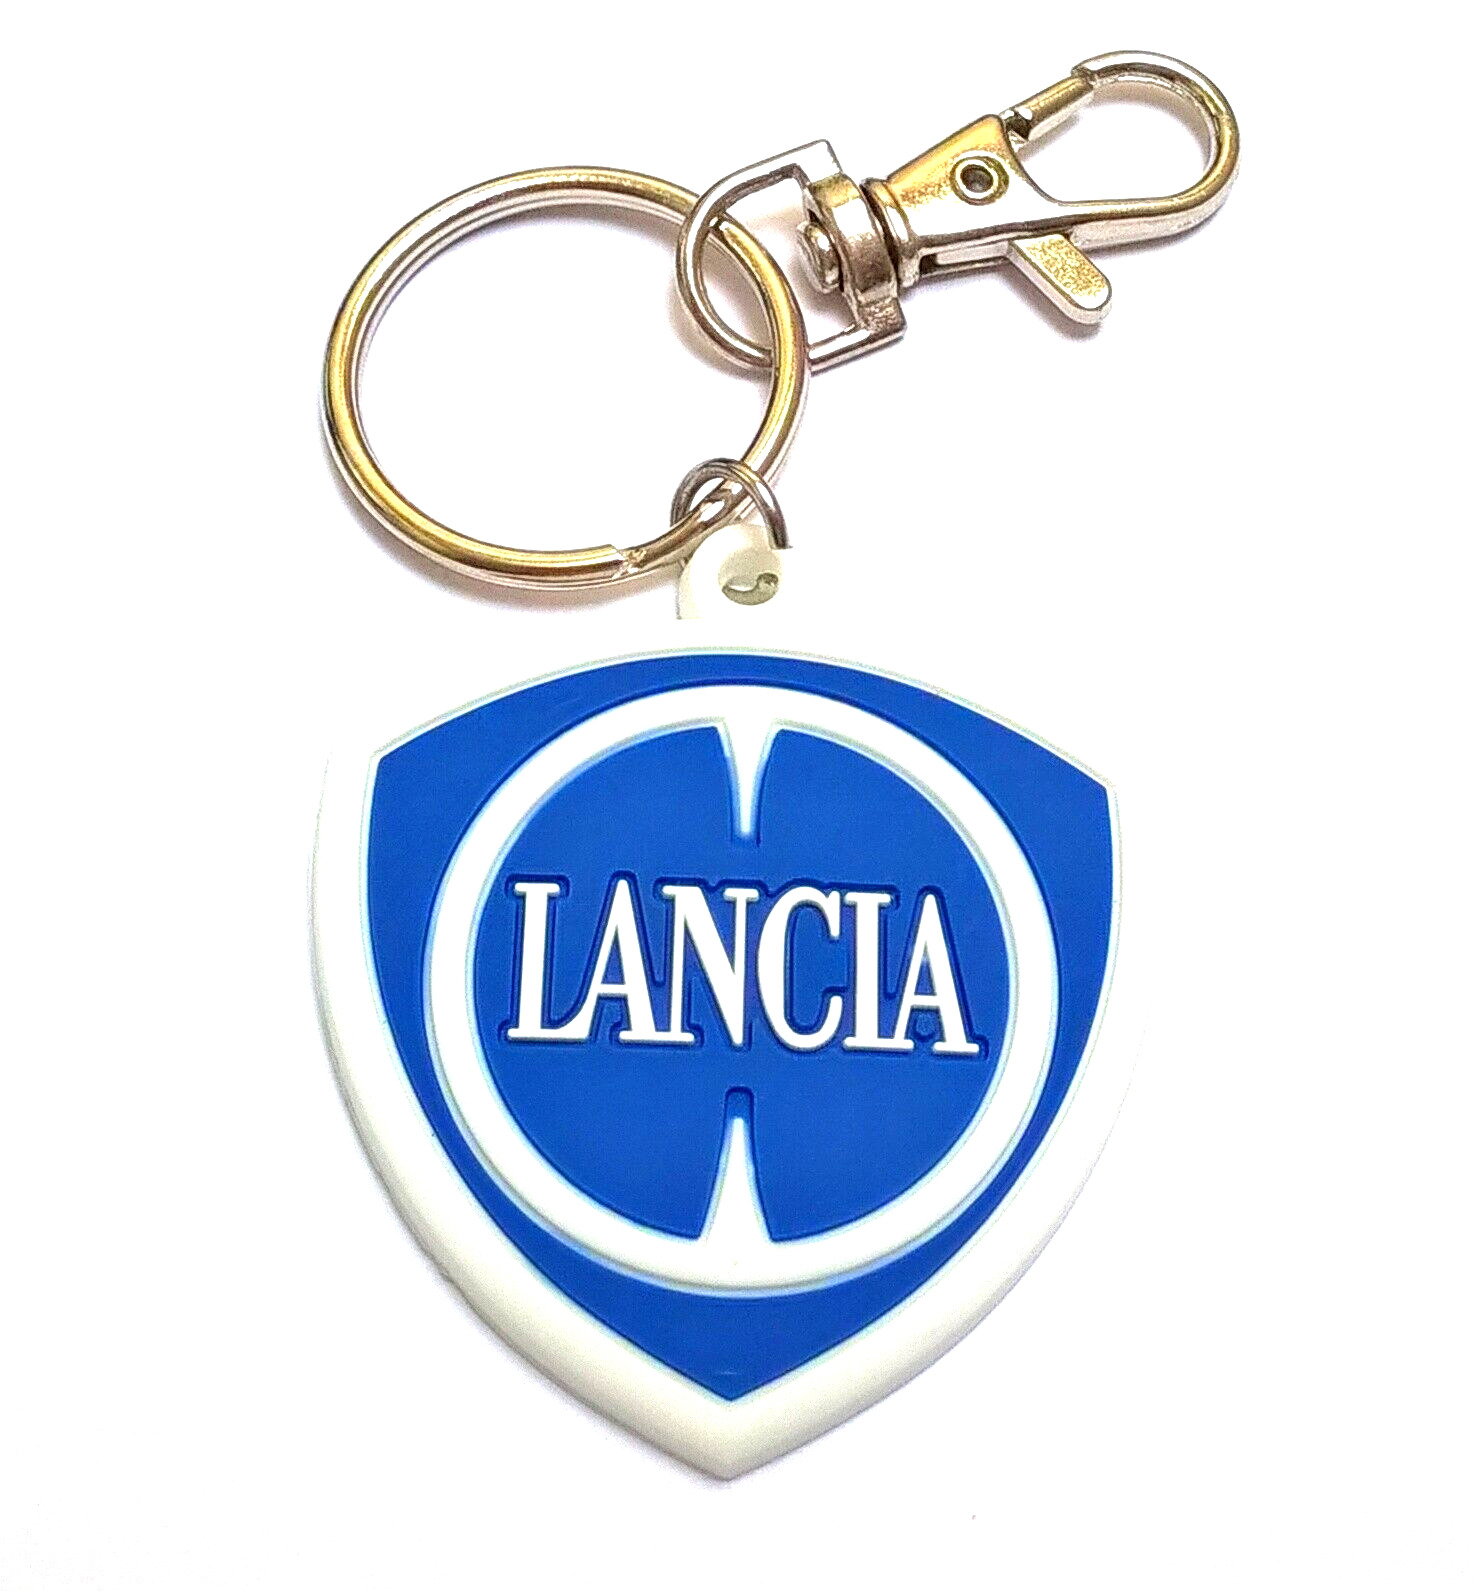 Lancia keychain rubber key ring logo emblem Delta Integrale Fulvia - must have